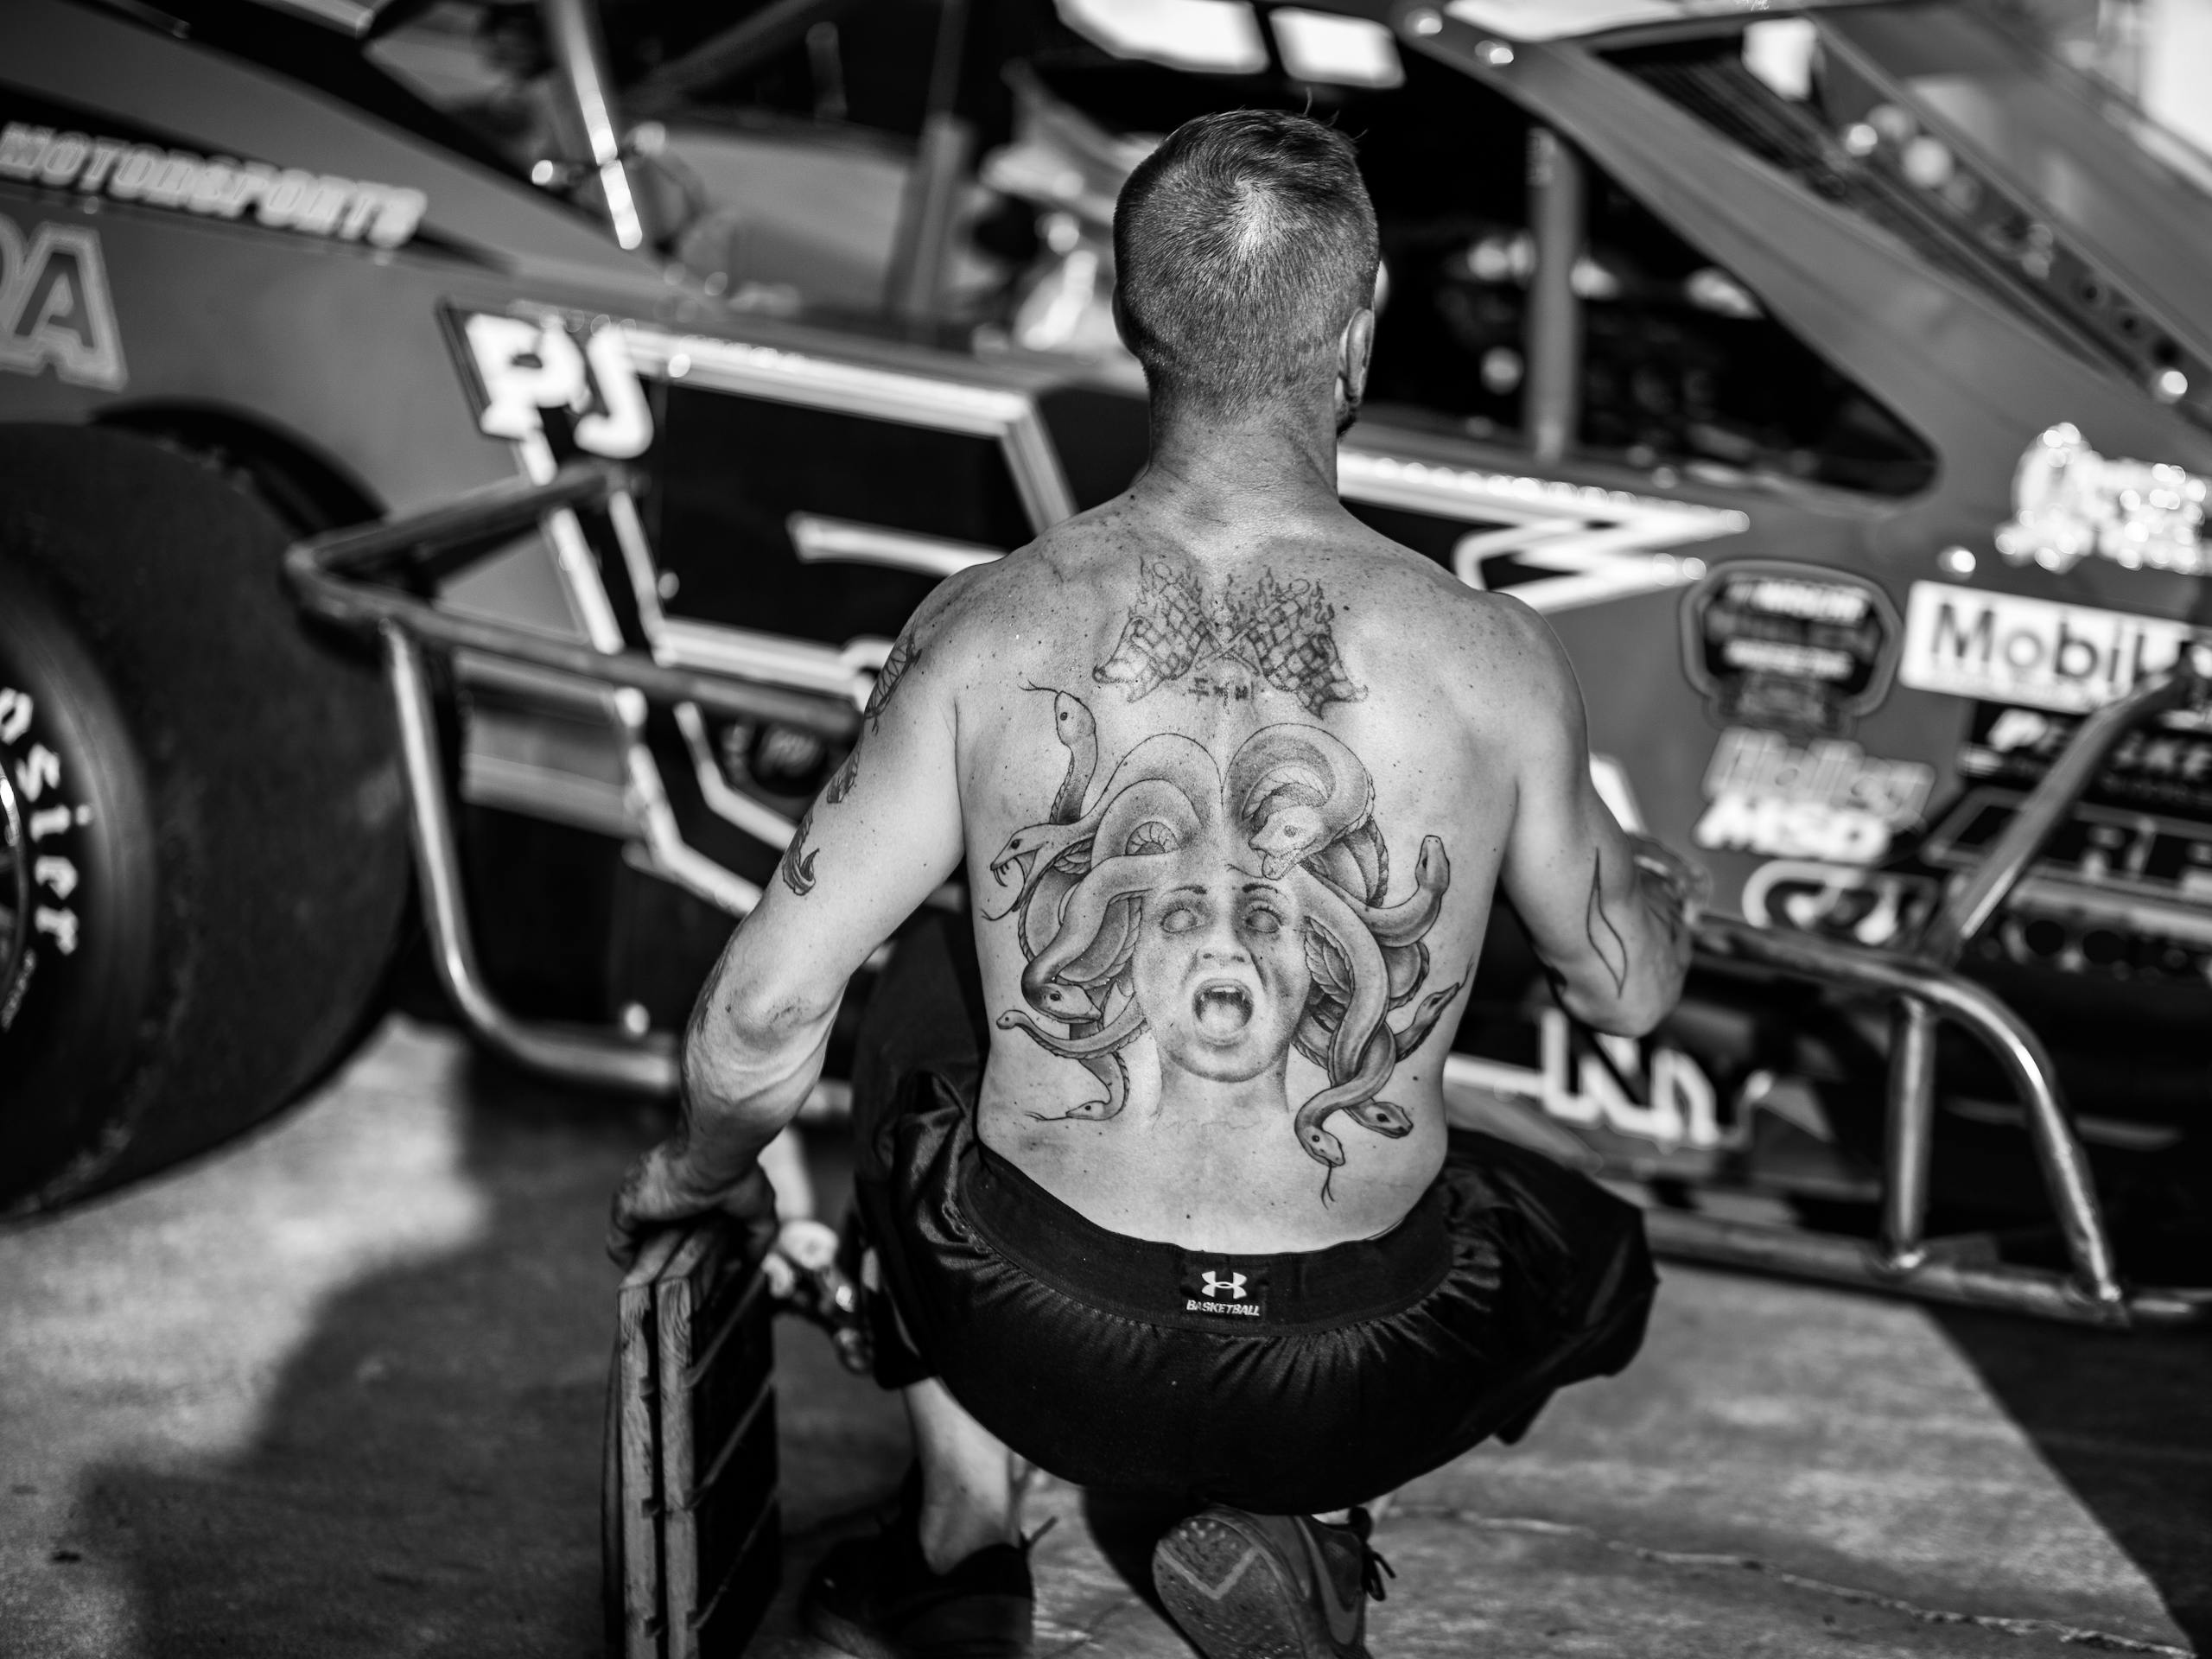 Grassroots racing atmosphere medusa back tattoo patron